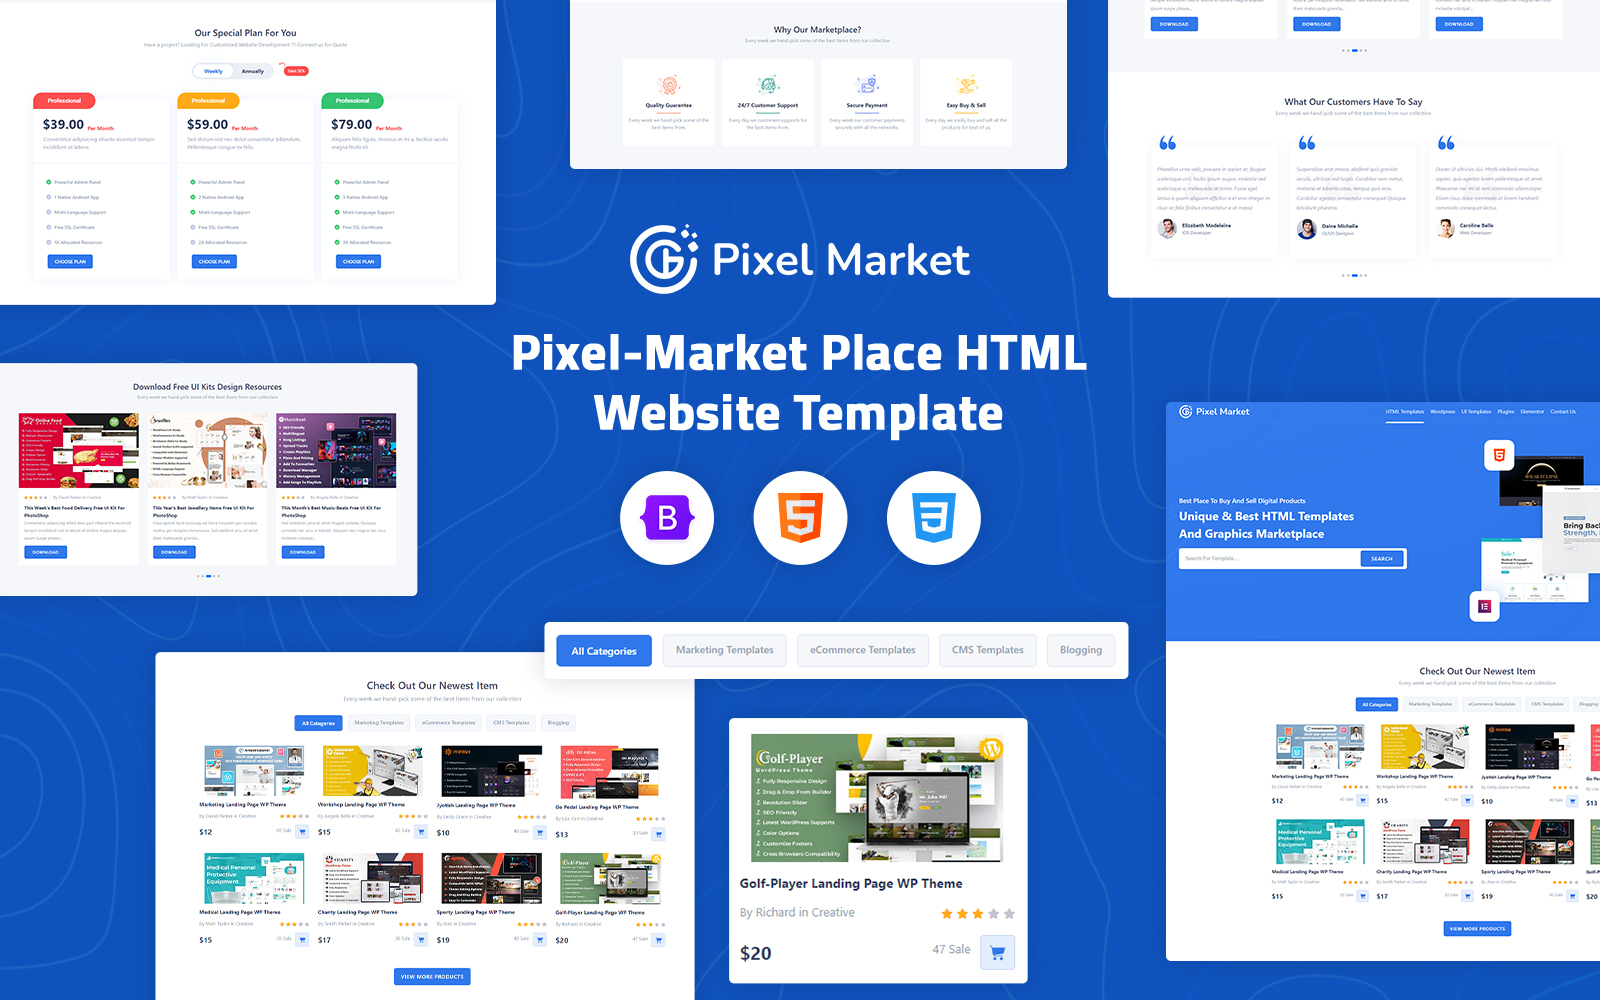 Pixel-Market Place HTML Website Template